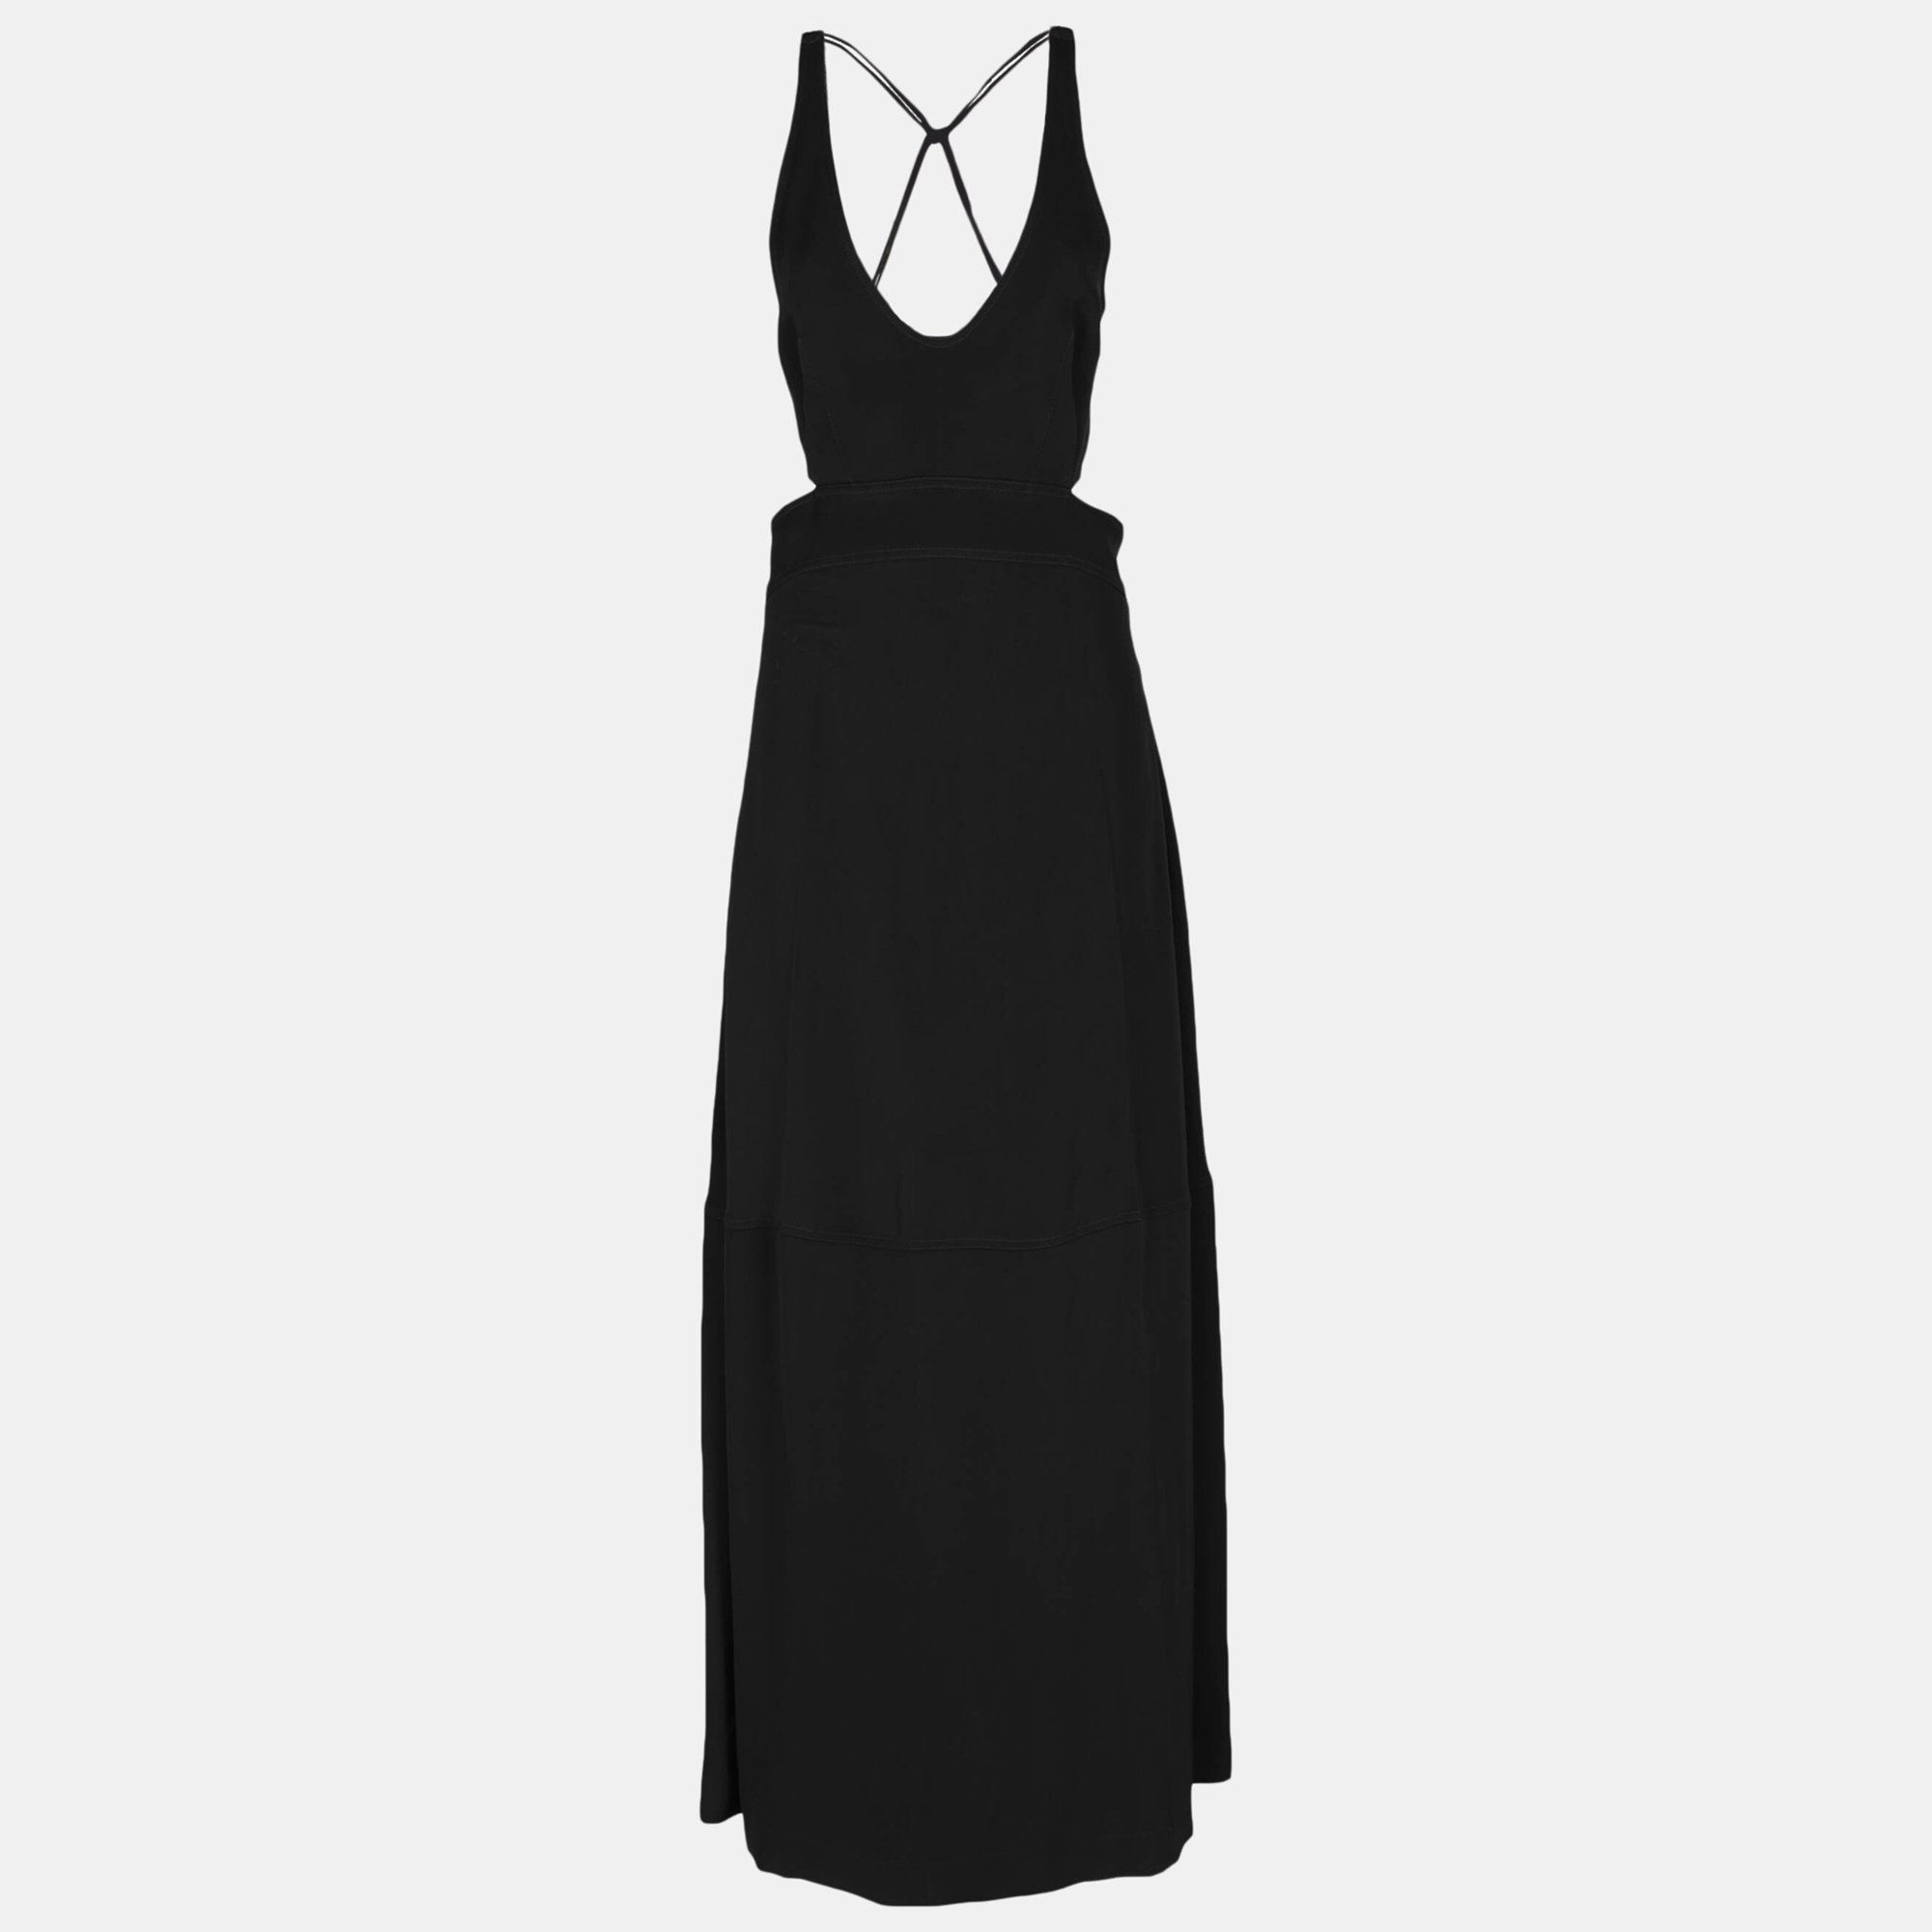 Victoria Beckham Women's Synthetic Fibers Long Dress - Black - S